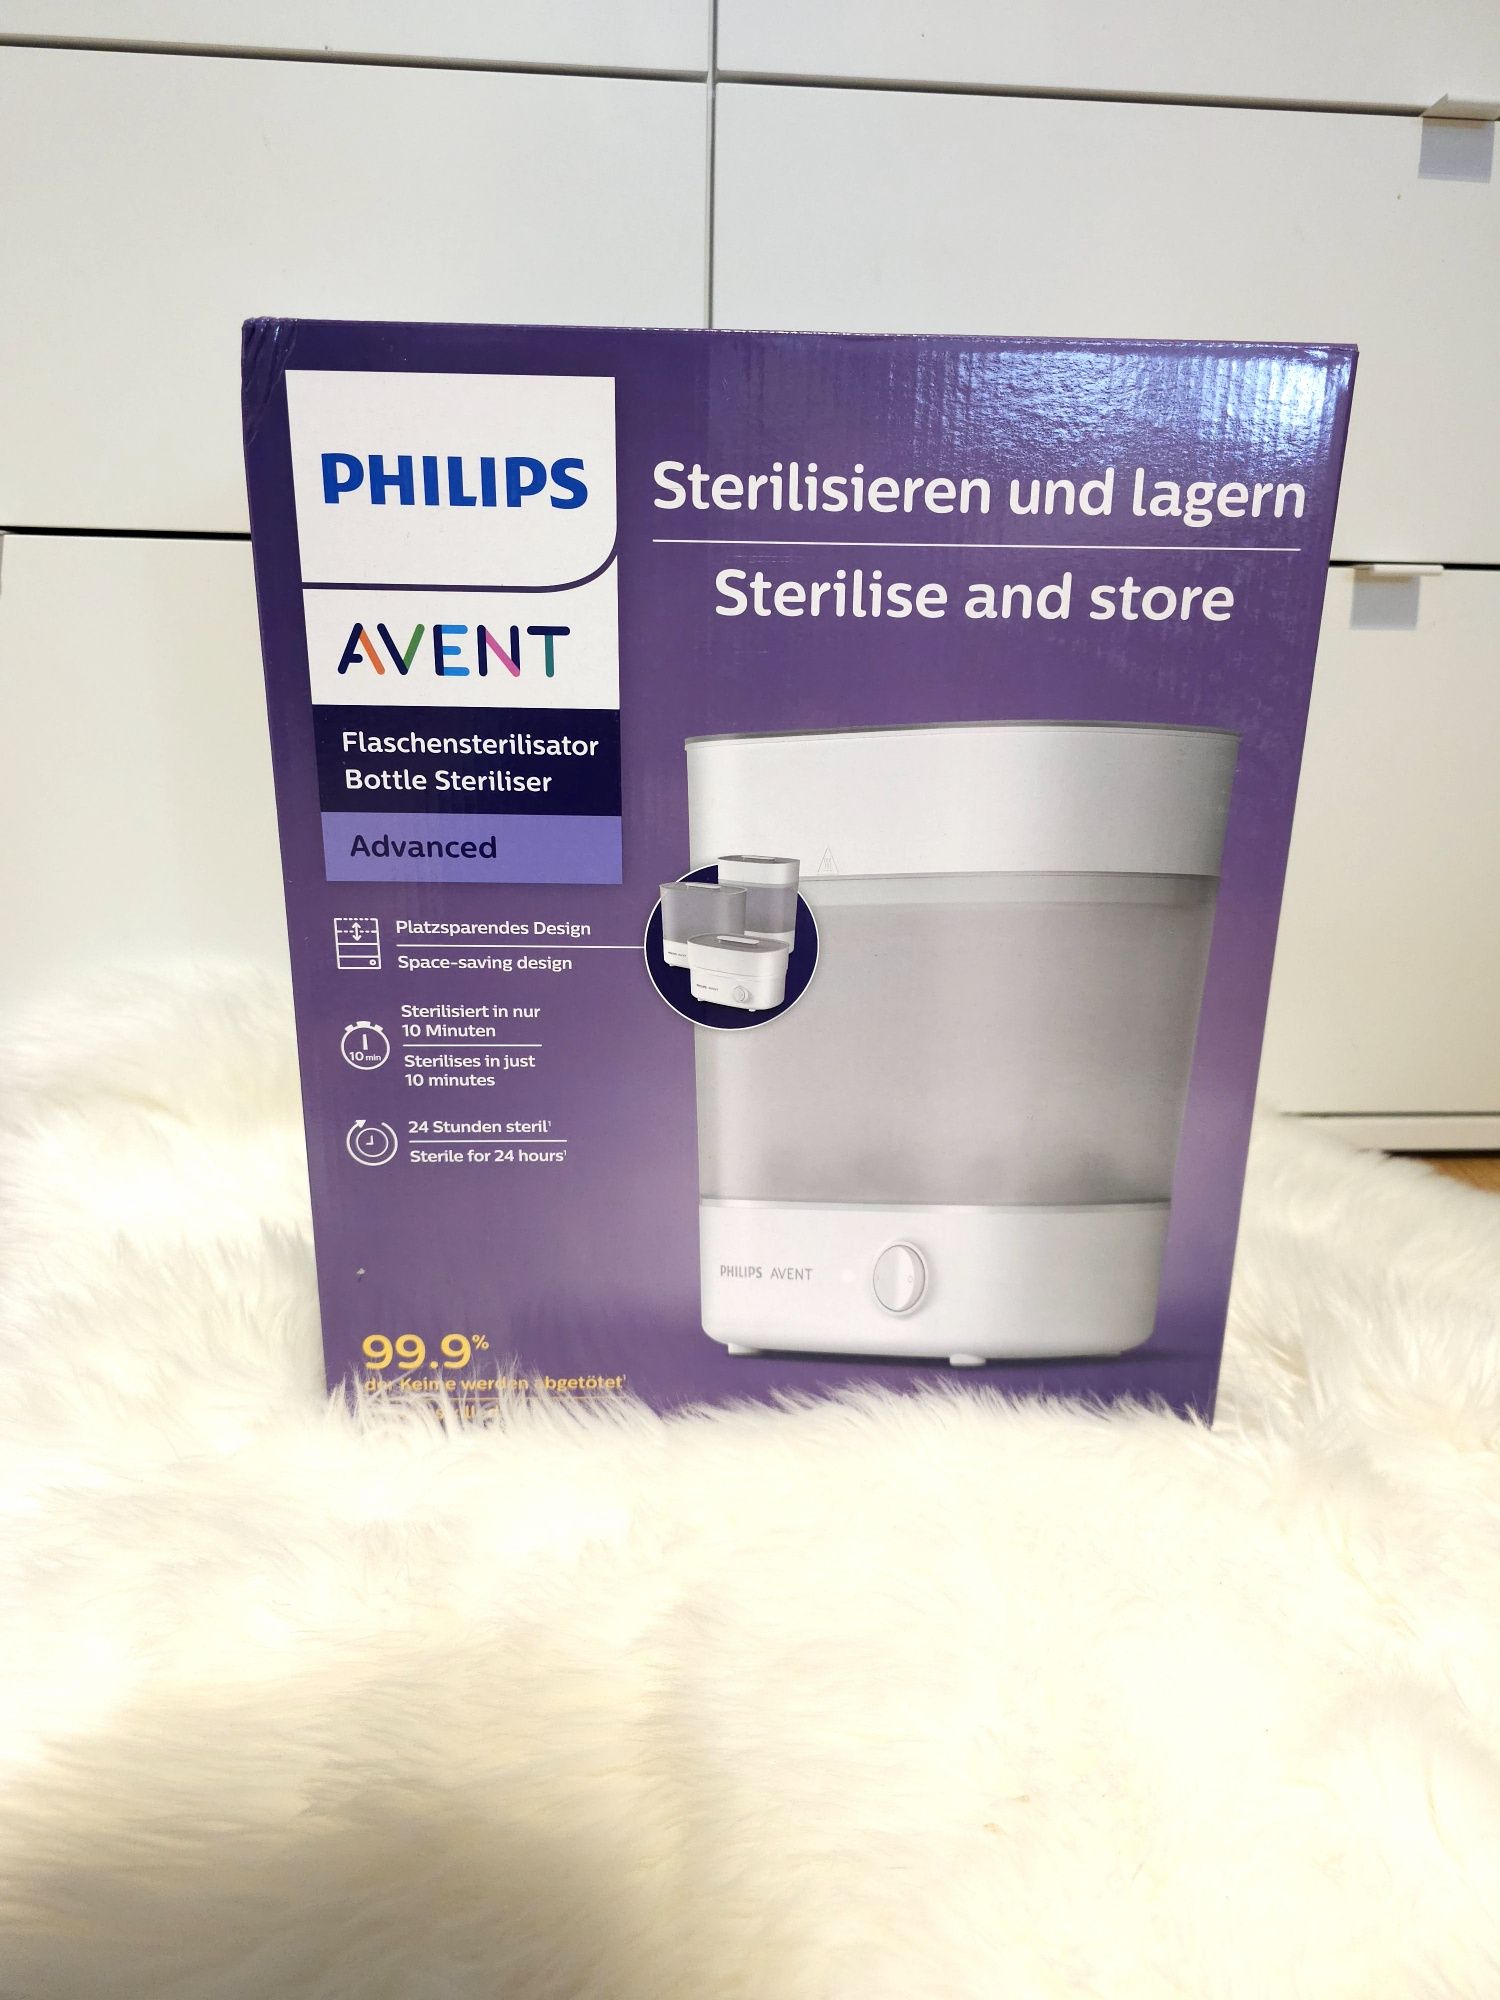 Sterylizator butelek i smoczków. Philips Avent Advanced